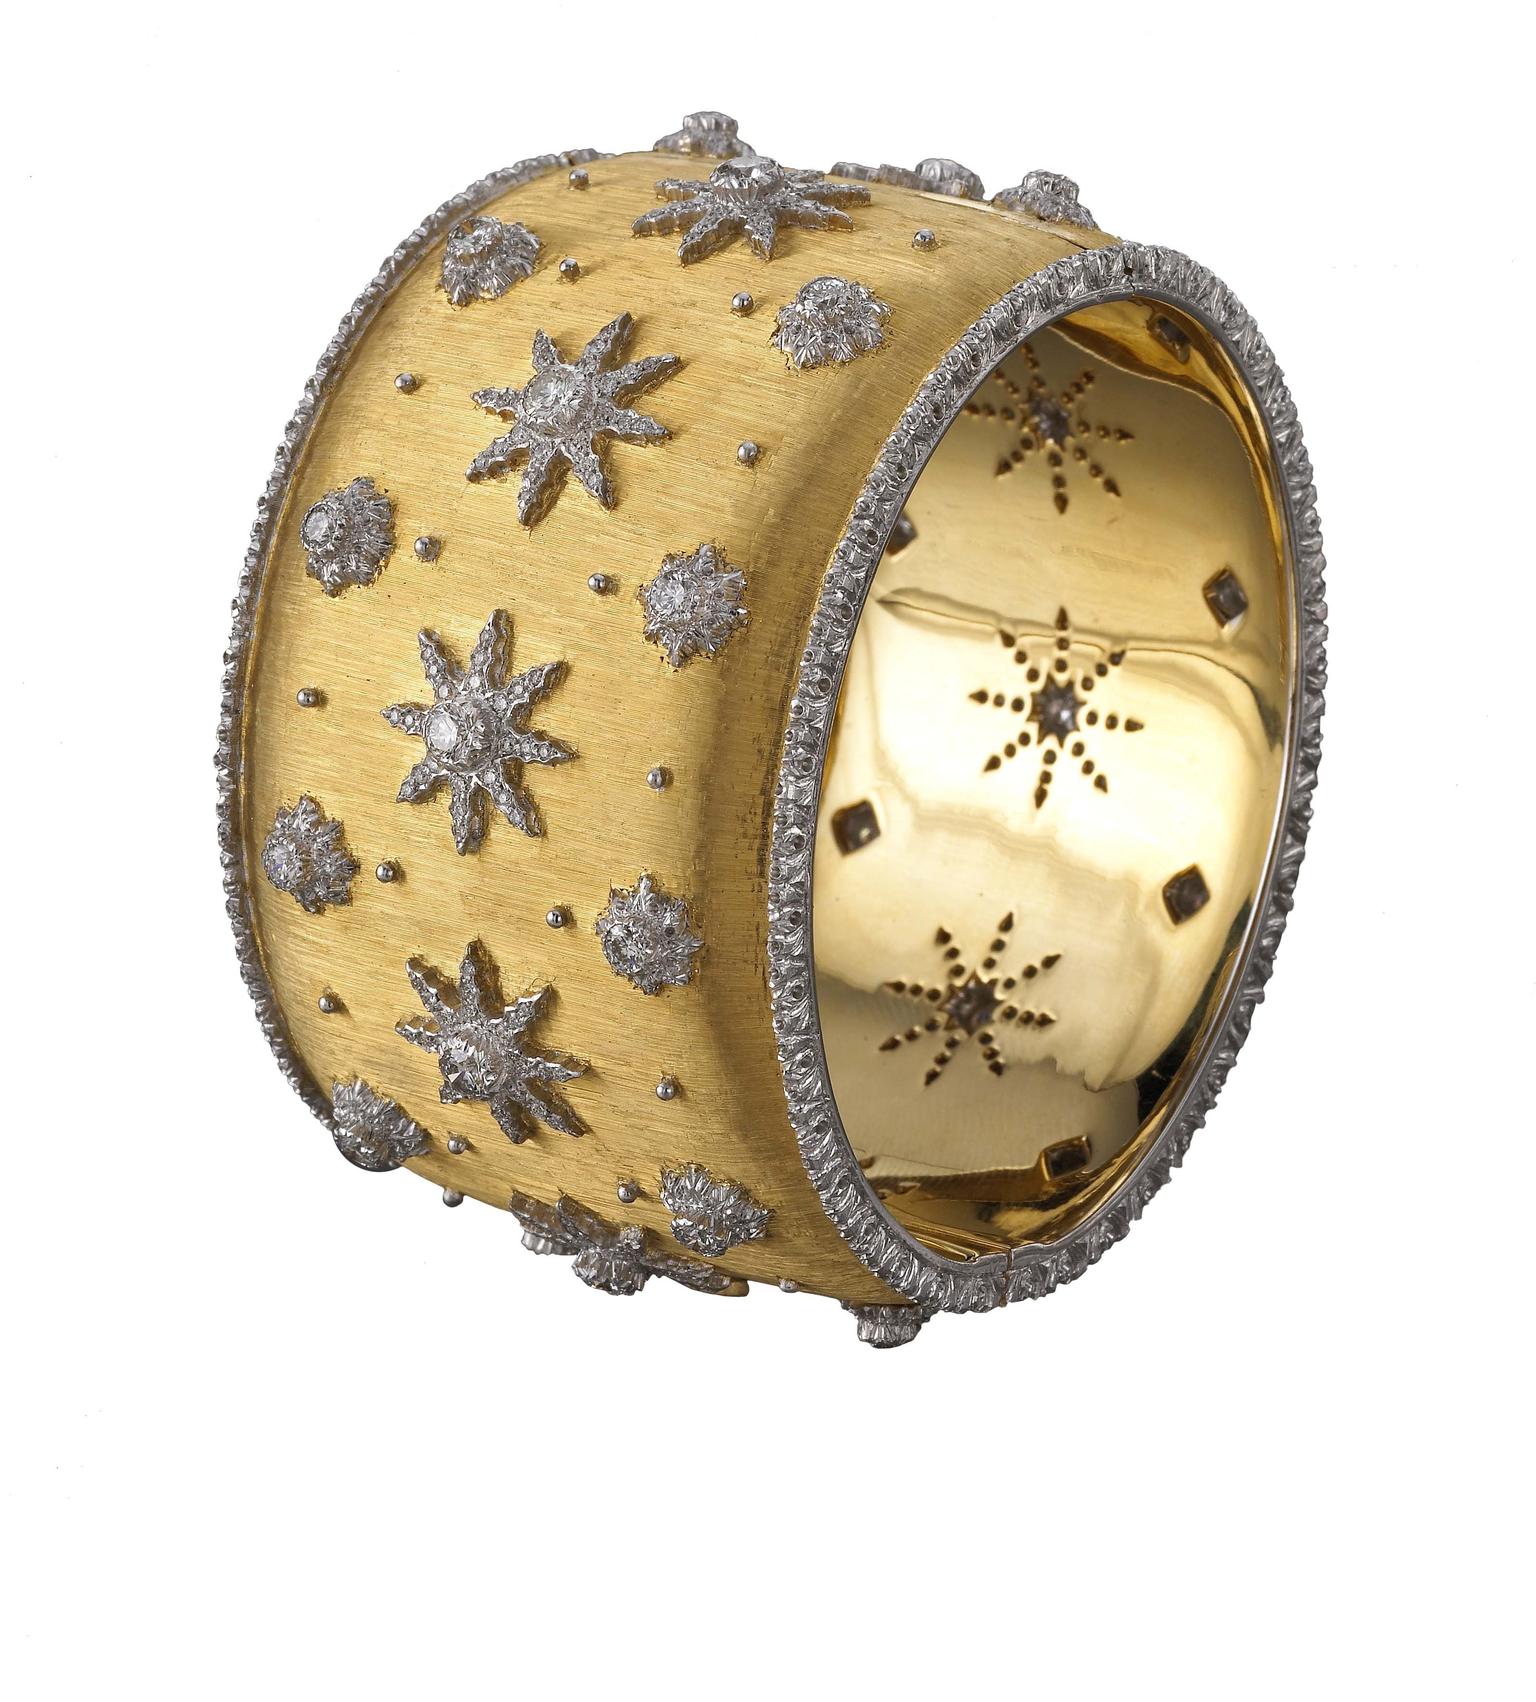 Buccellati cuff bracelet in gold, decorated using the "regato" engraving technique and set with round brilliant diamonds.